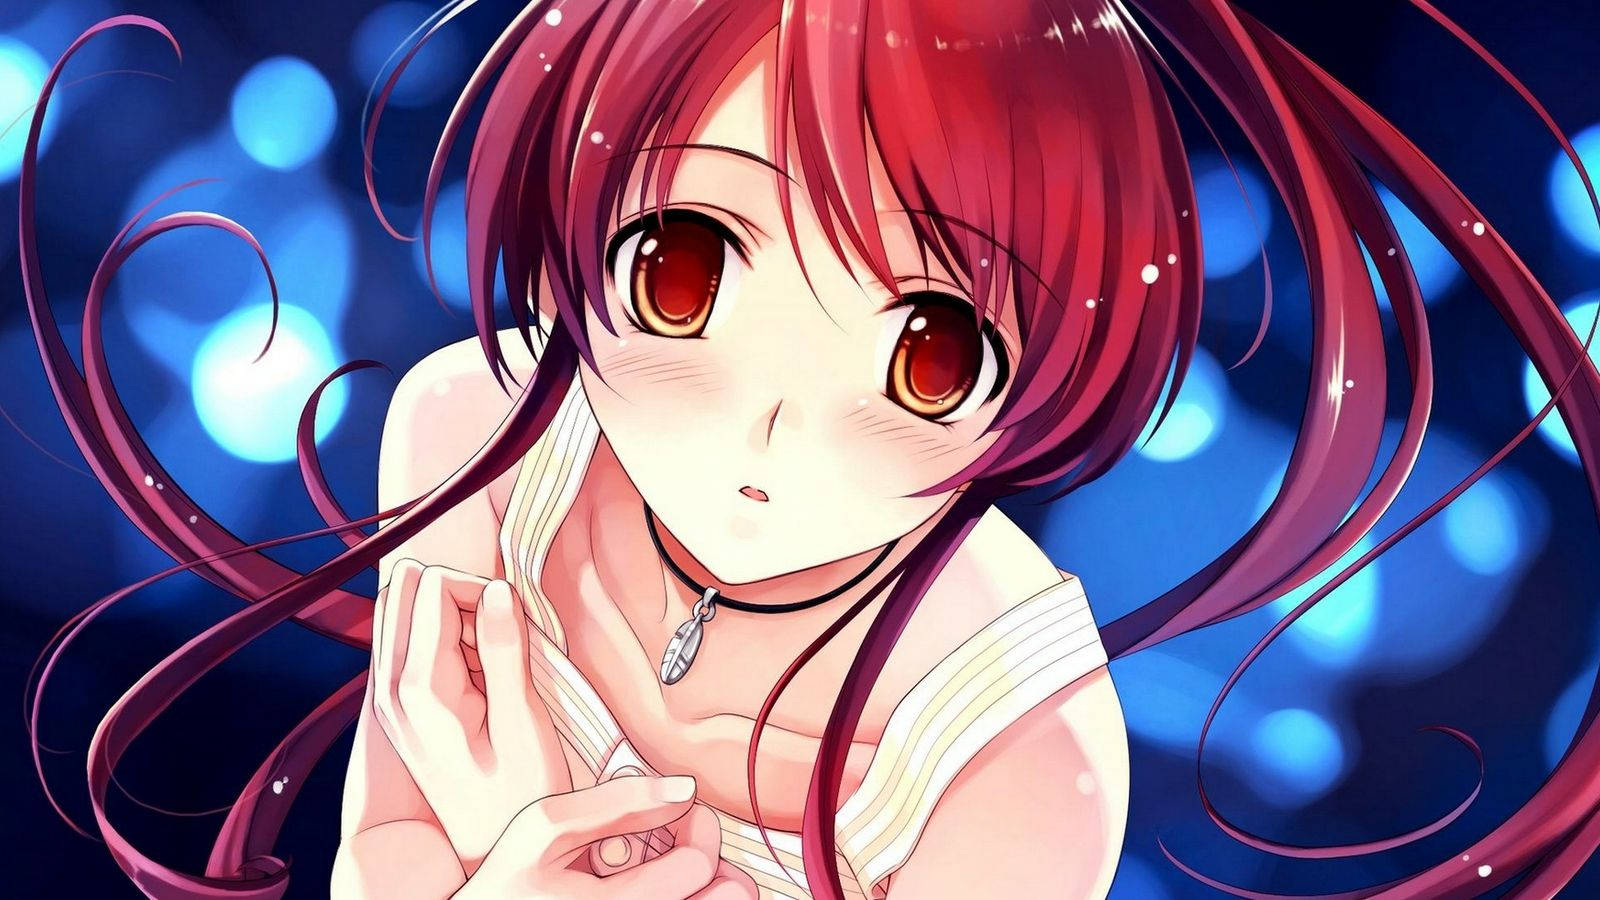 Kawaii Anime Girl With Red Hair Wallpaper